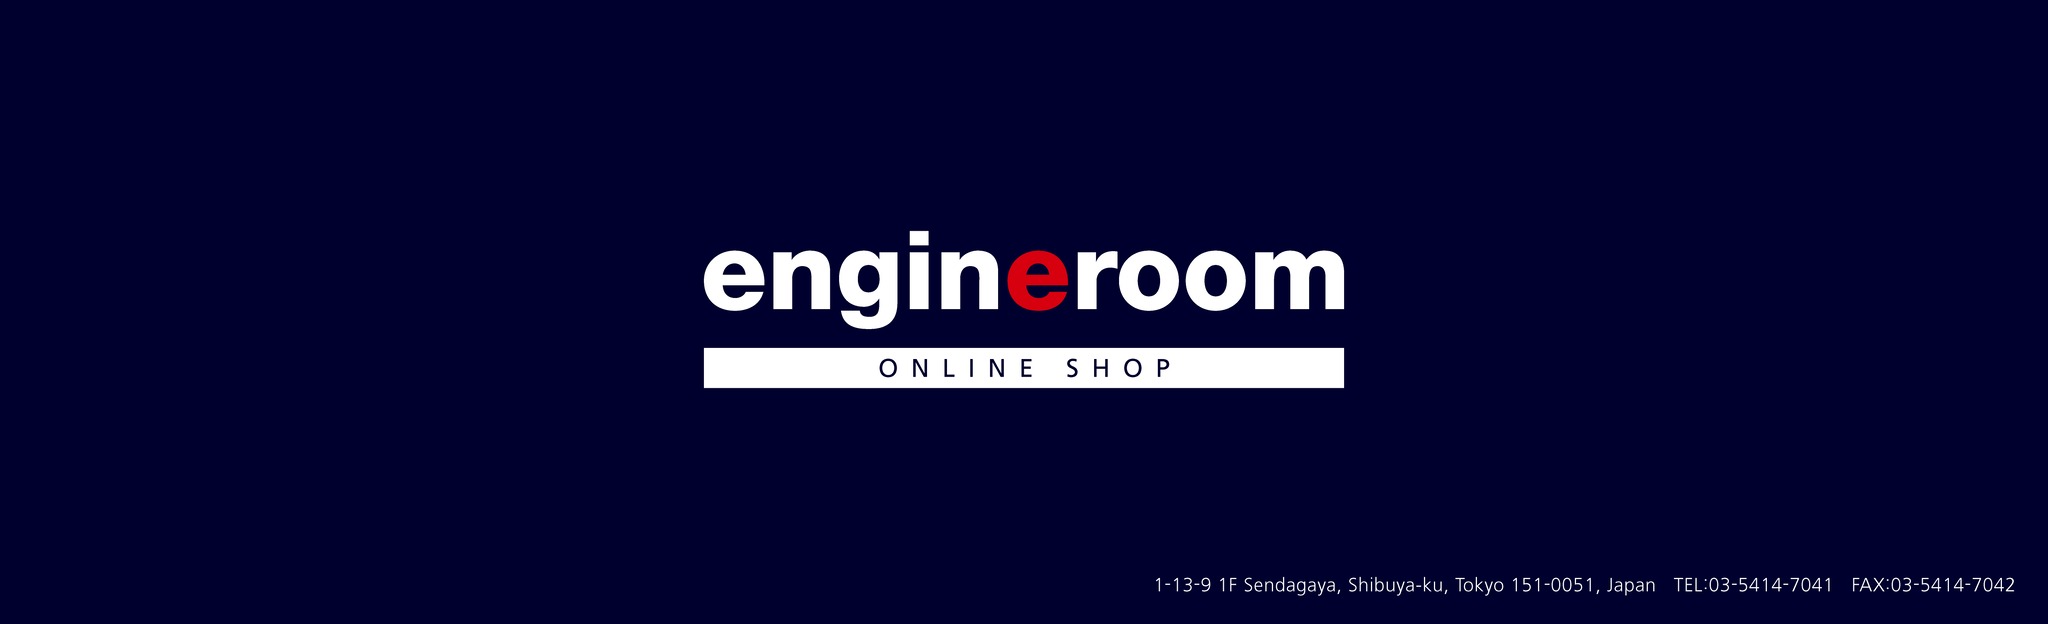 engineroom online shop